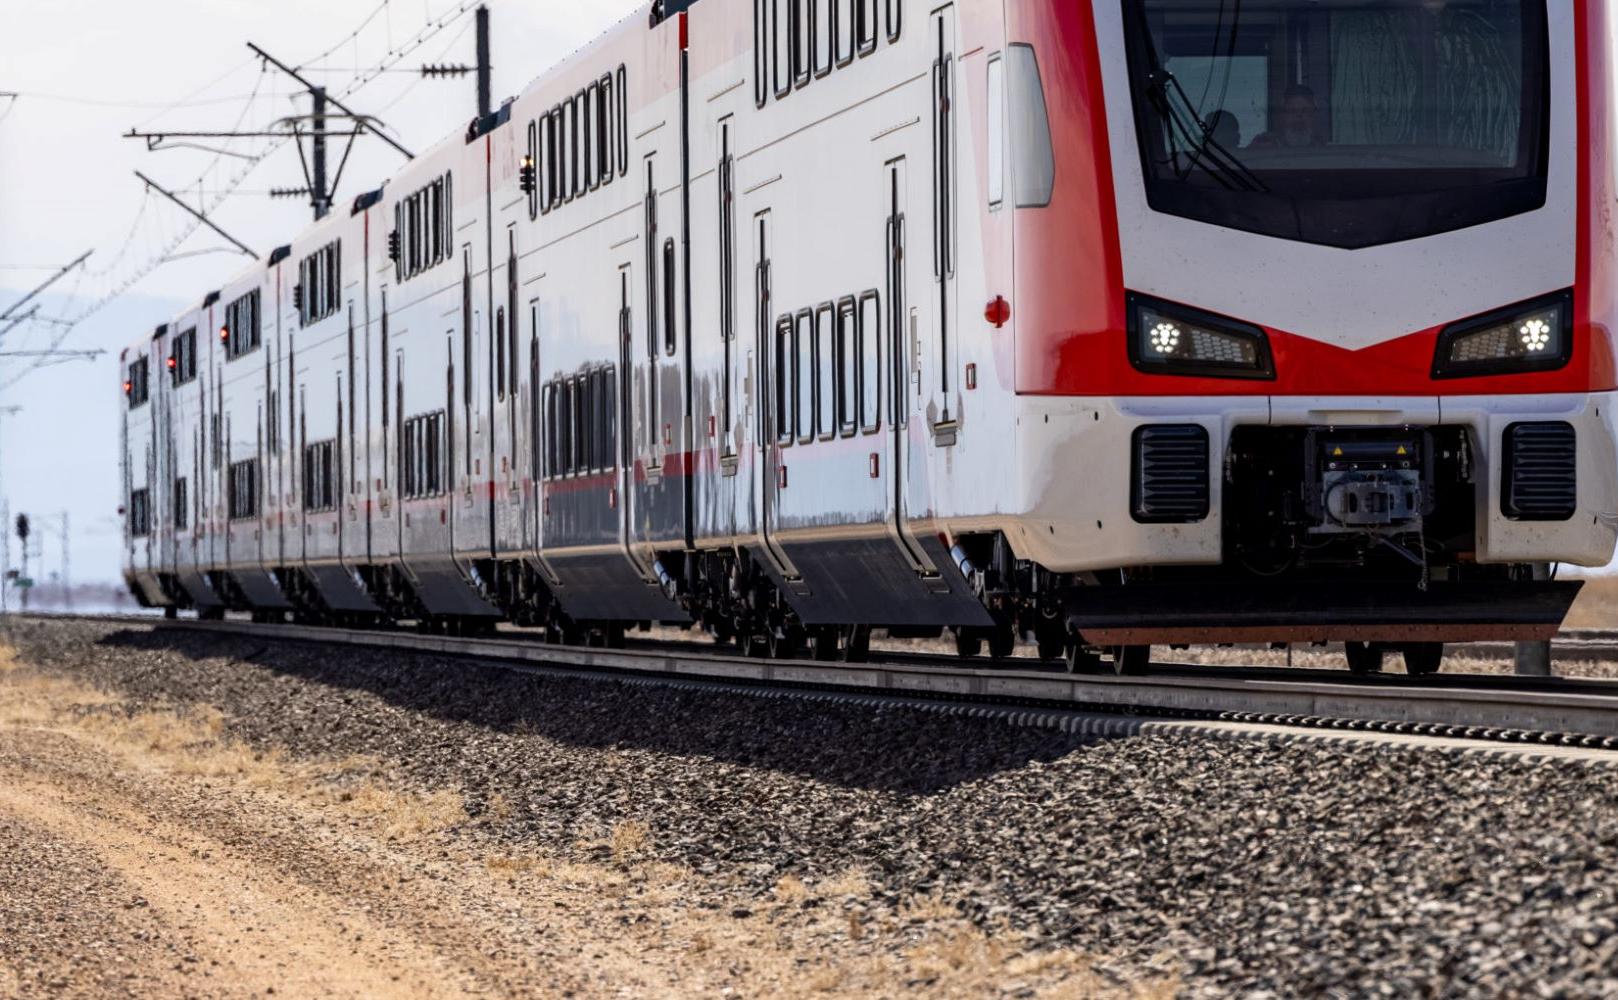 Electric train getting tested on tracks in Utah